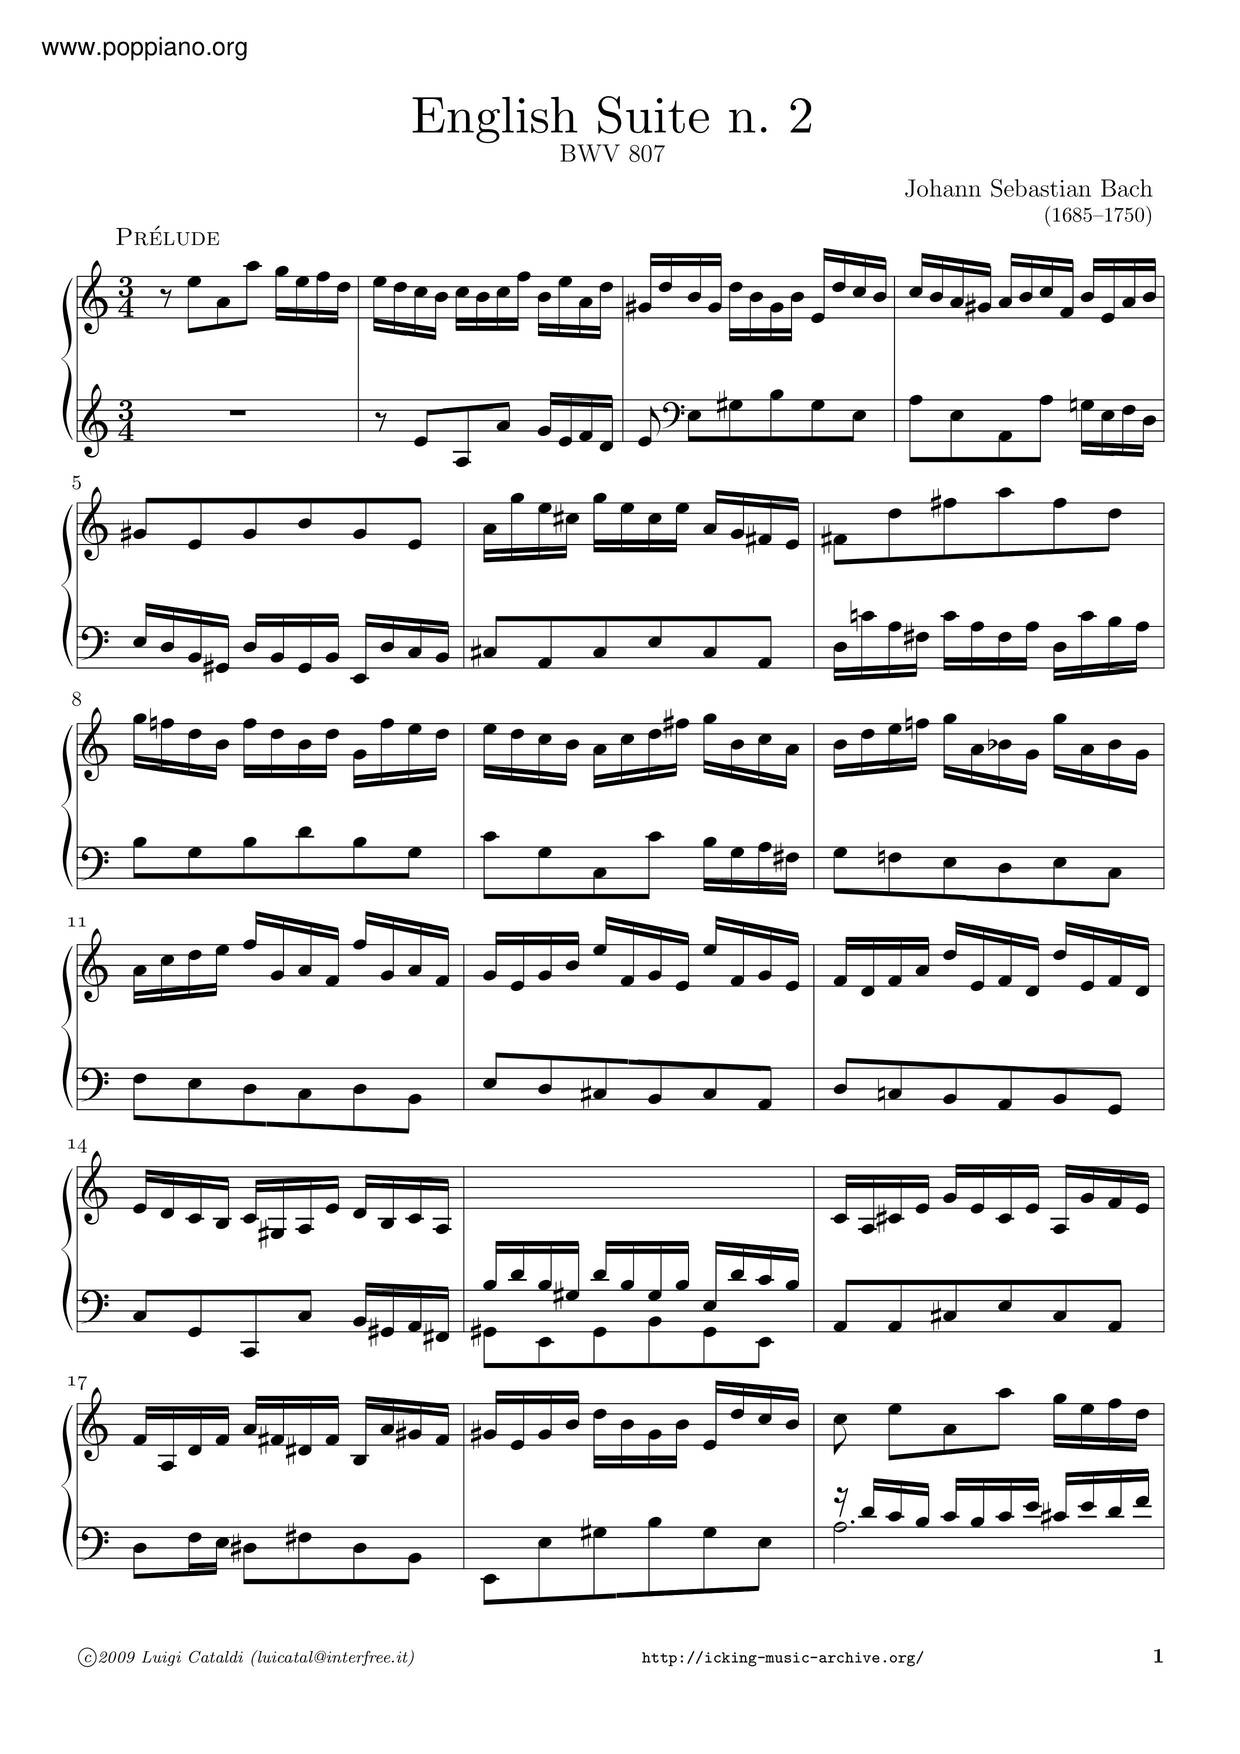 English Suite No. 2, BWV 807 Score